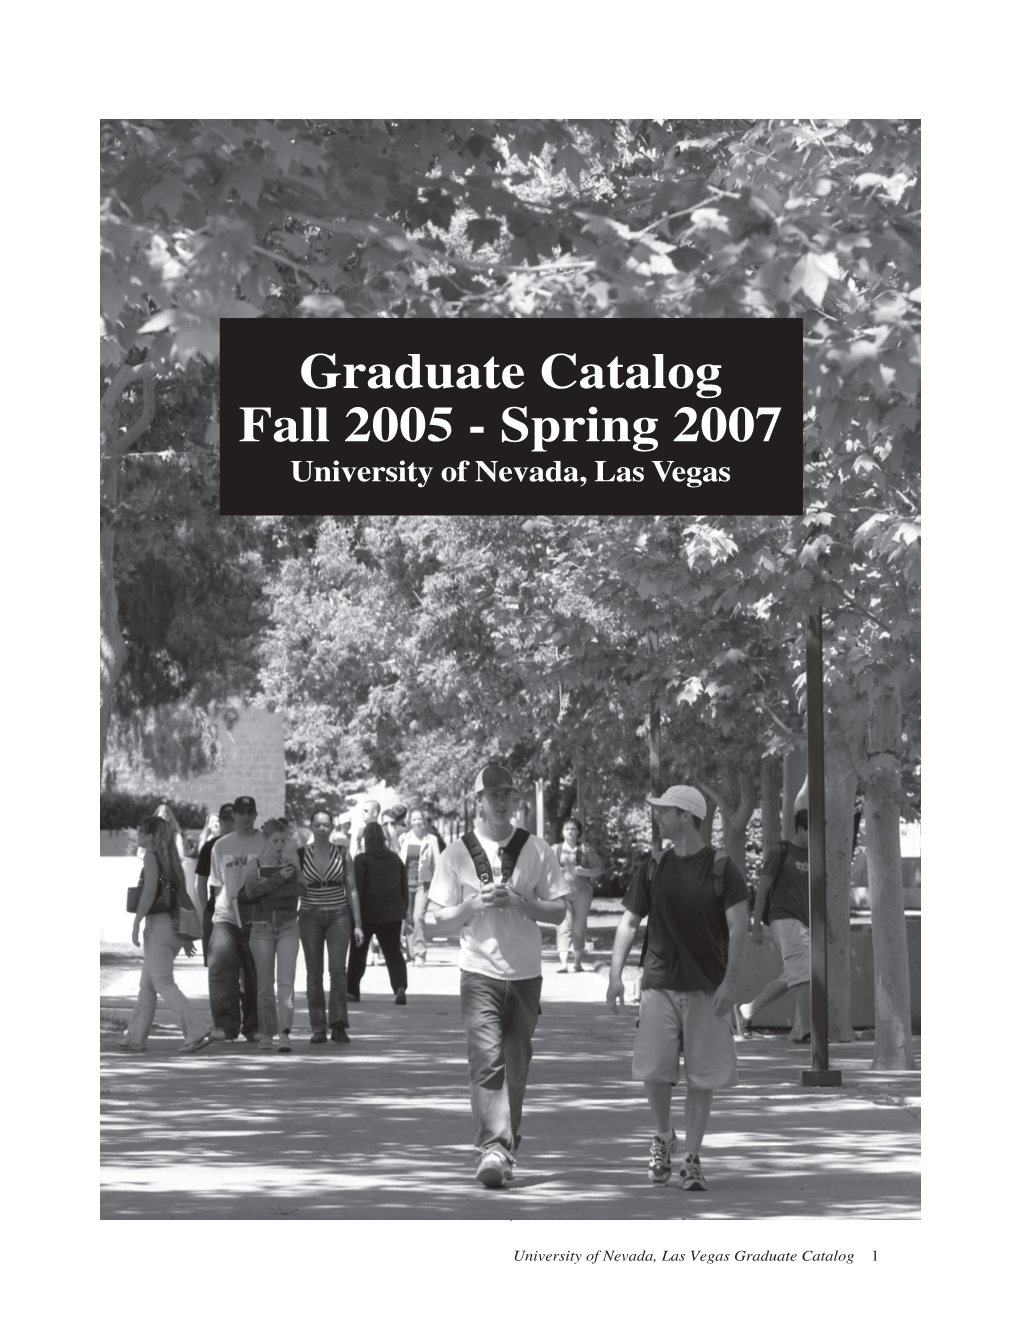 Graduate Catalog Fall 2005 - Spring 2007 University of Nevada, Las Vegas